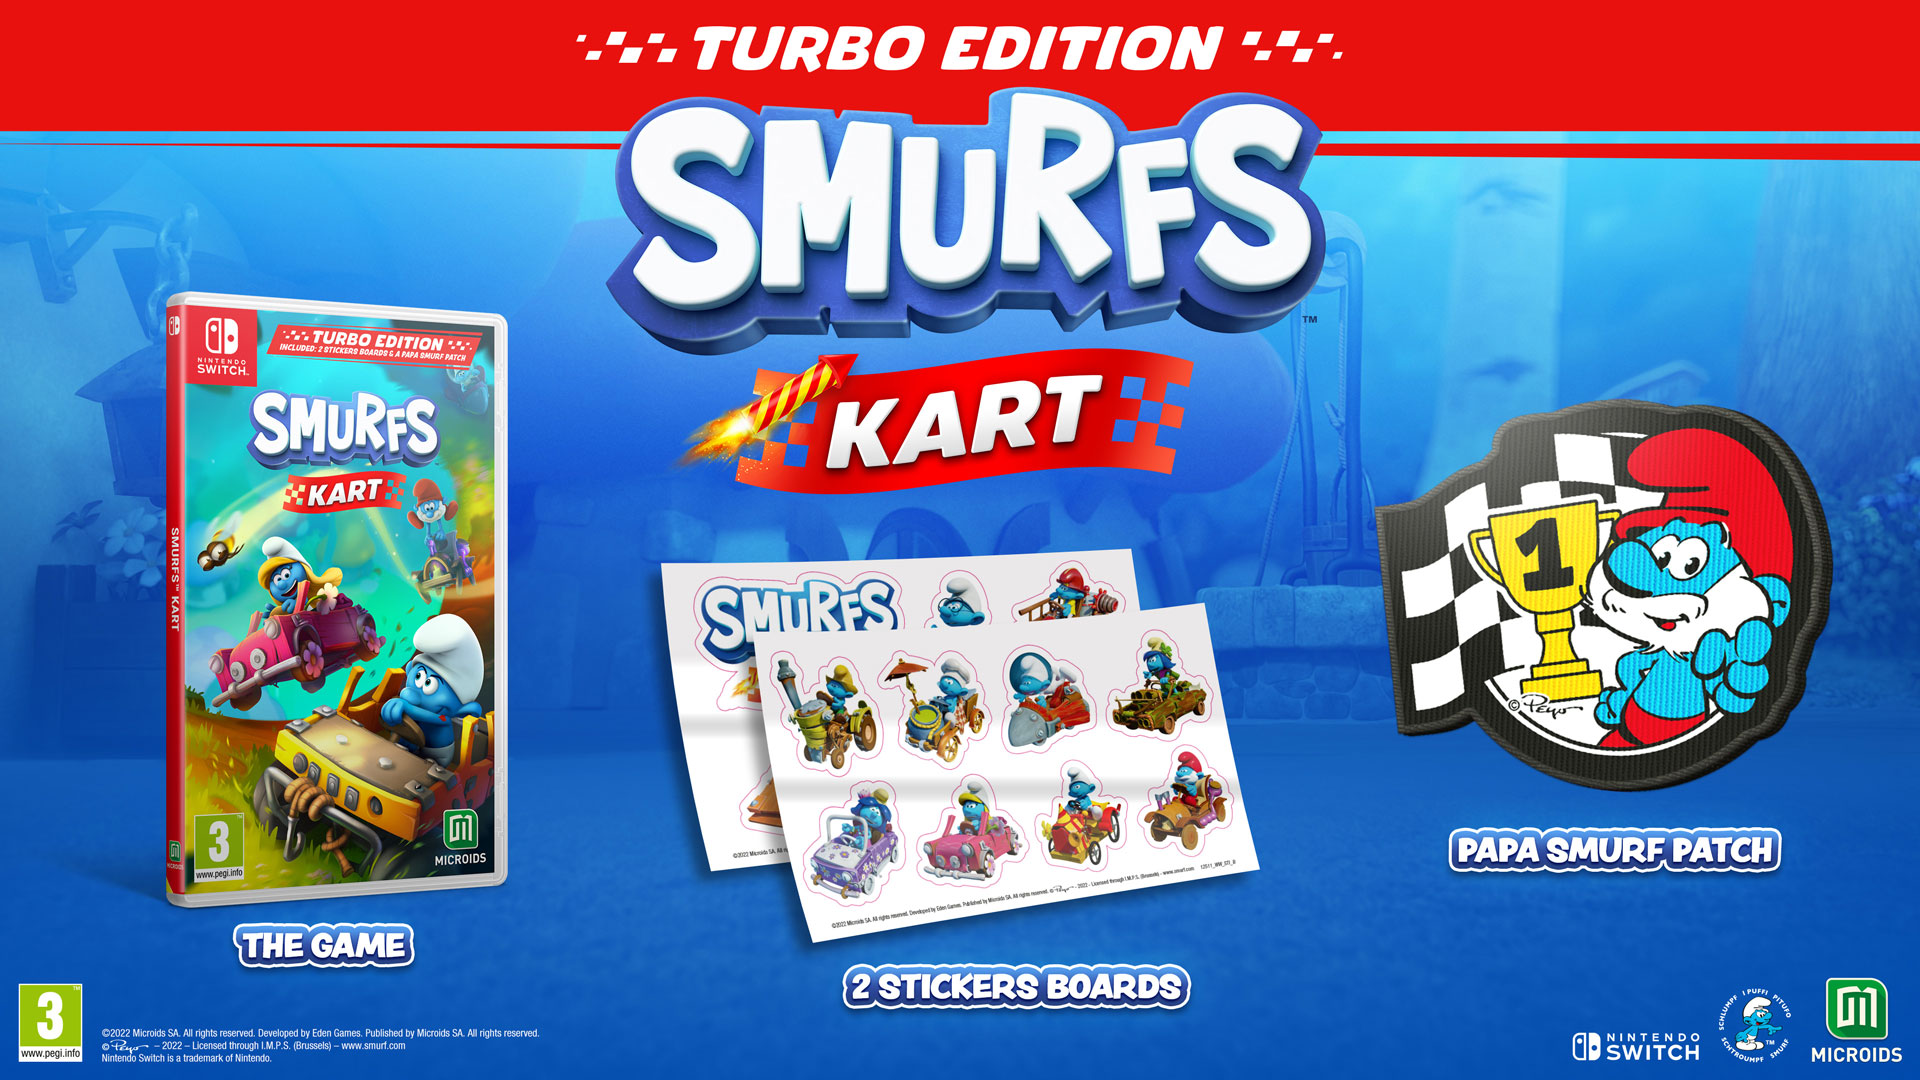 The Smurfs on Nintendo 3DS, Smurfing good gaming fun